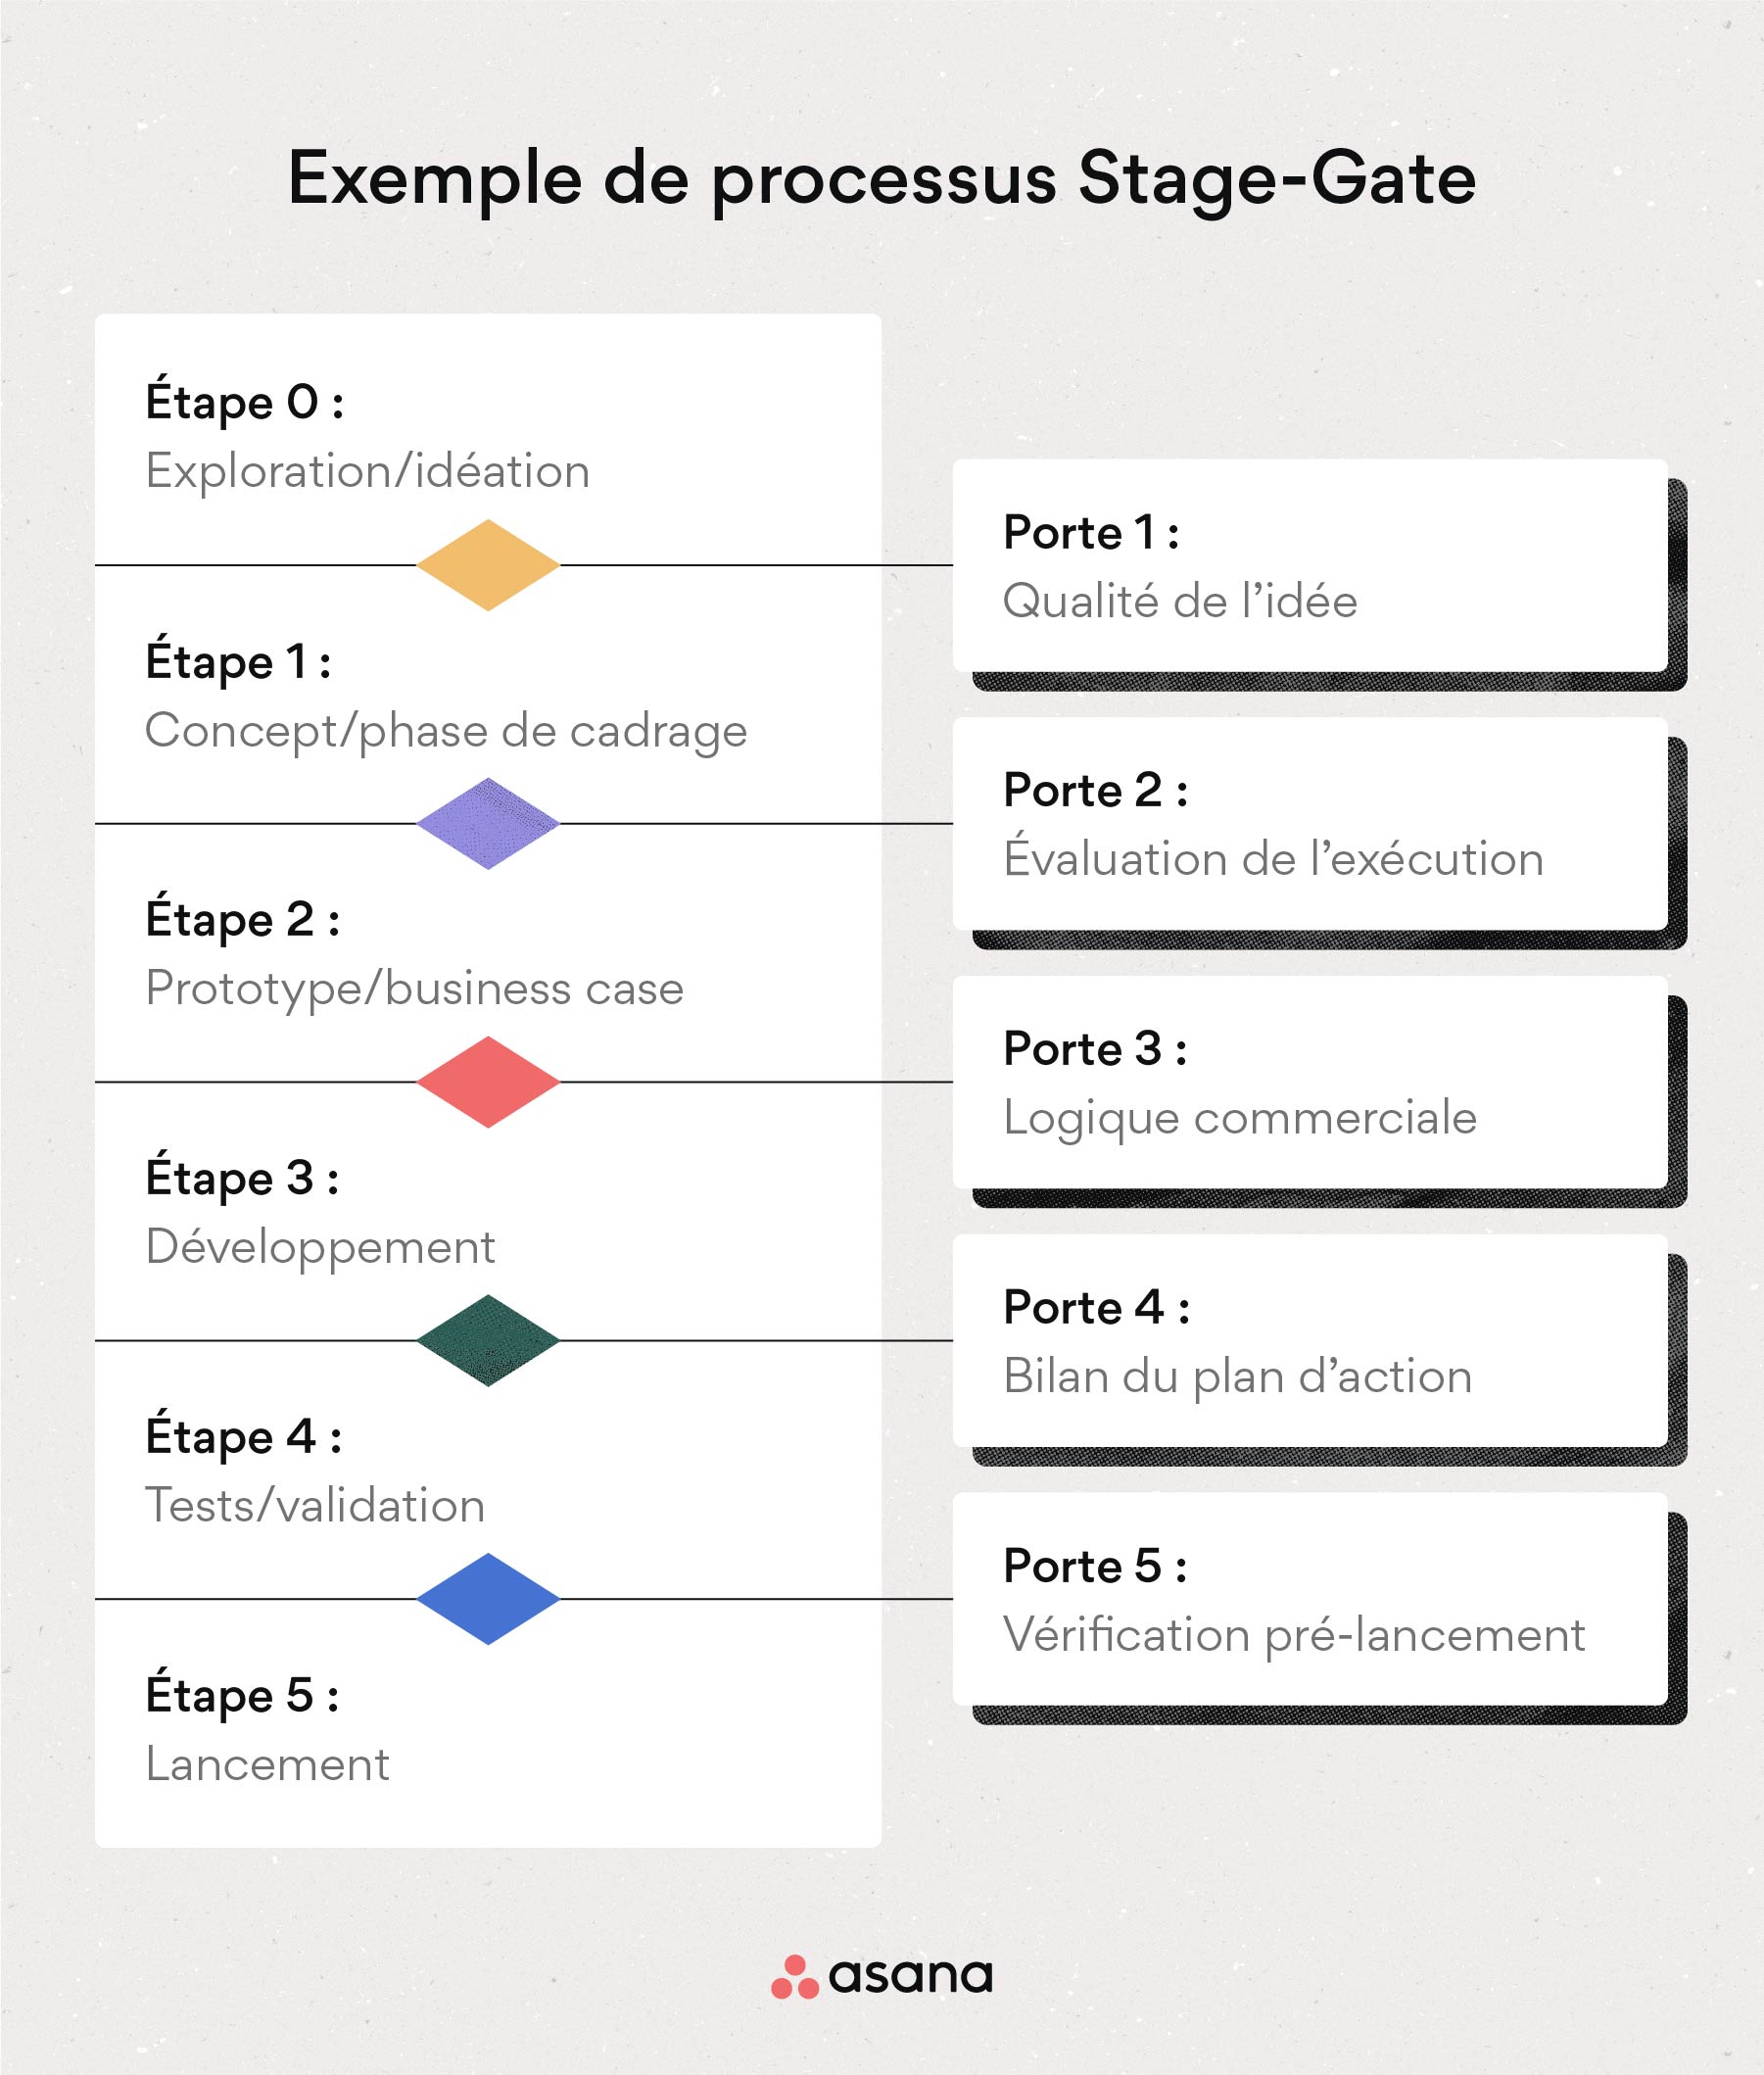 [Illustration intégrée] Processus Stage-Gate (exemple)